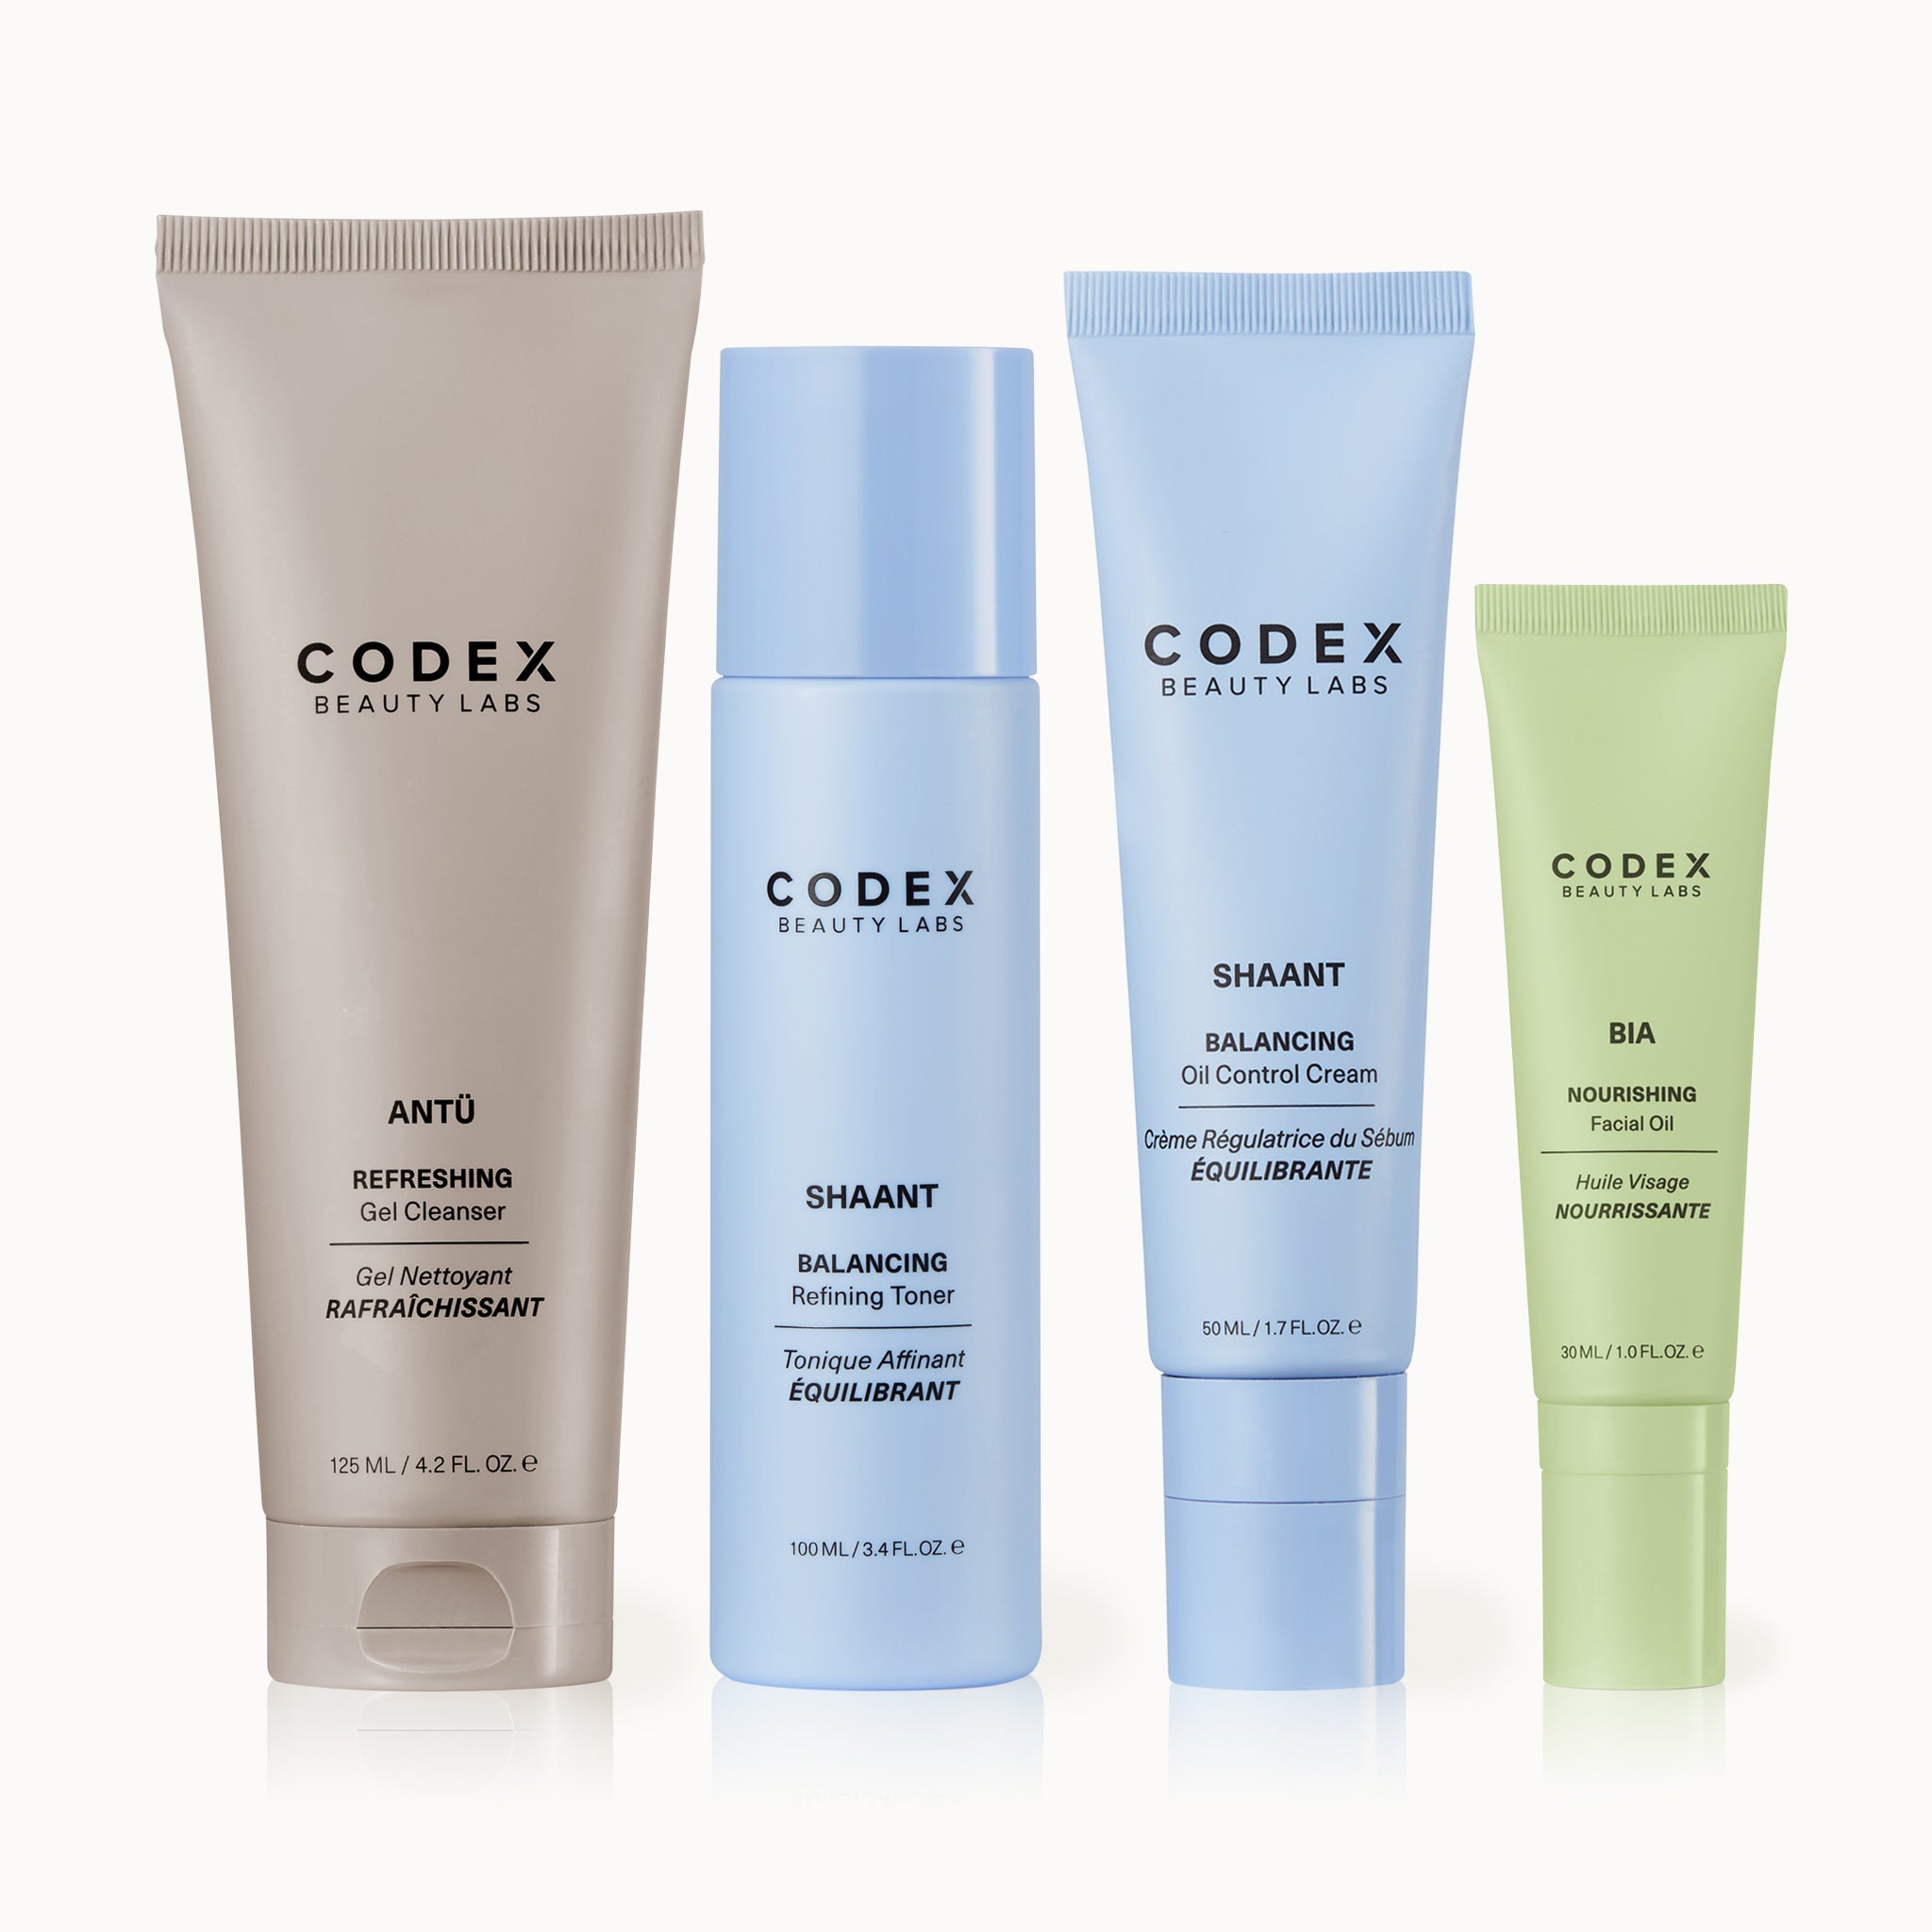 Antü Refreshing Gel Cleanser  Codex Beauty Labs – Codex Labs Corp